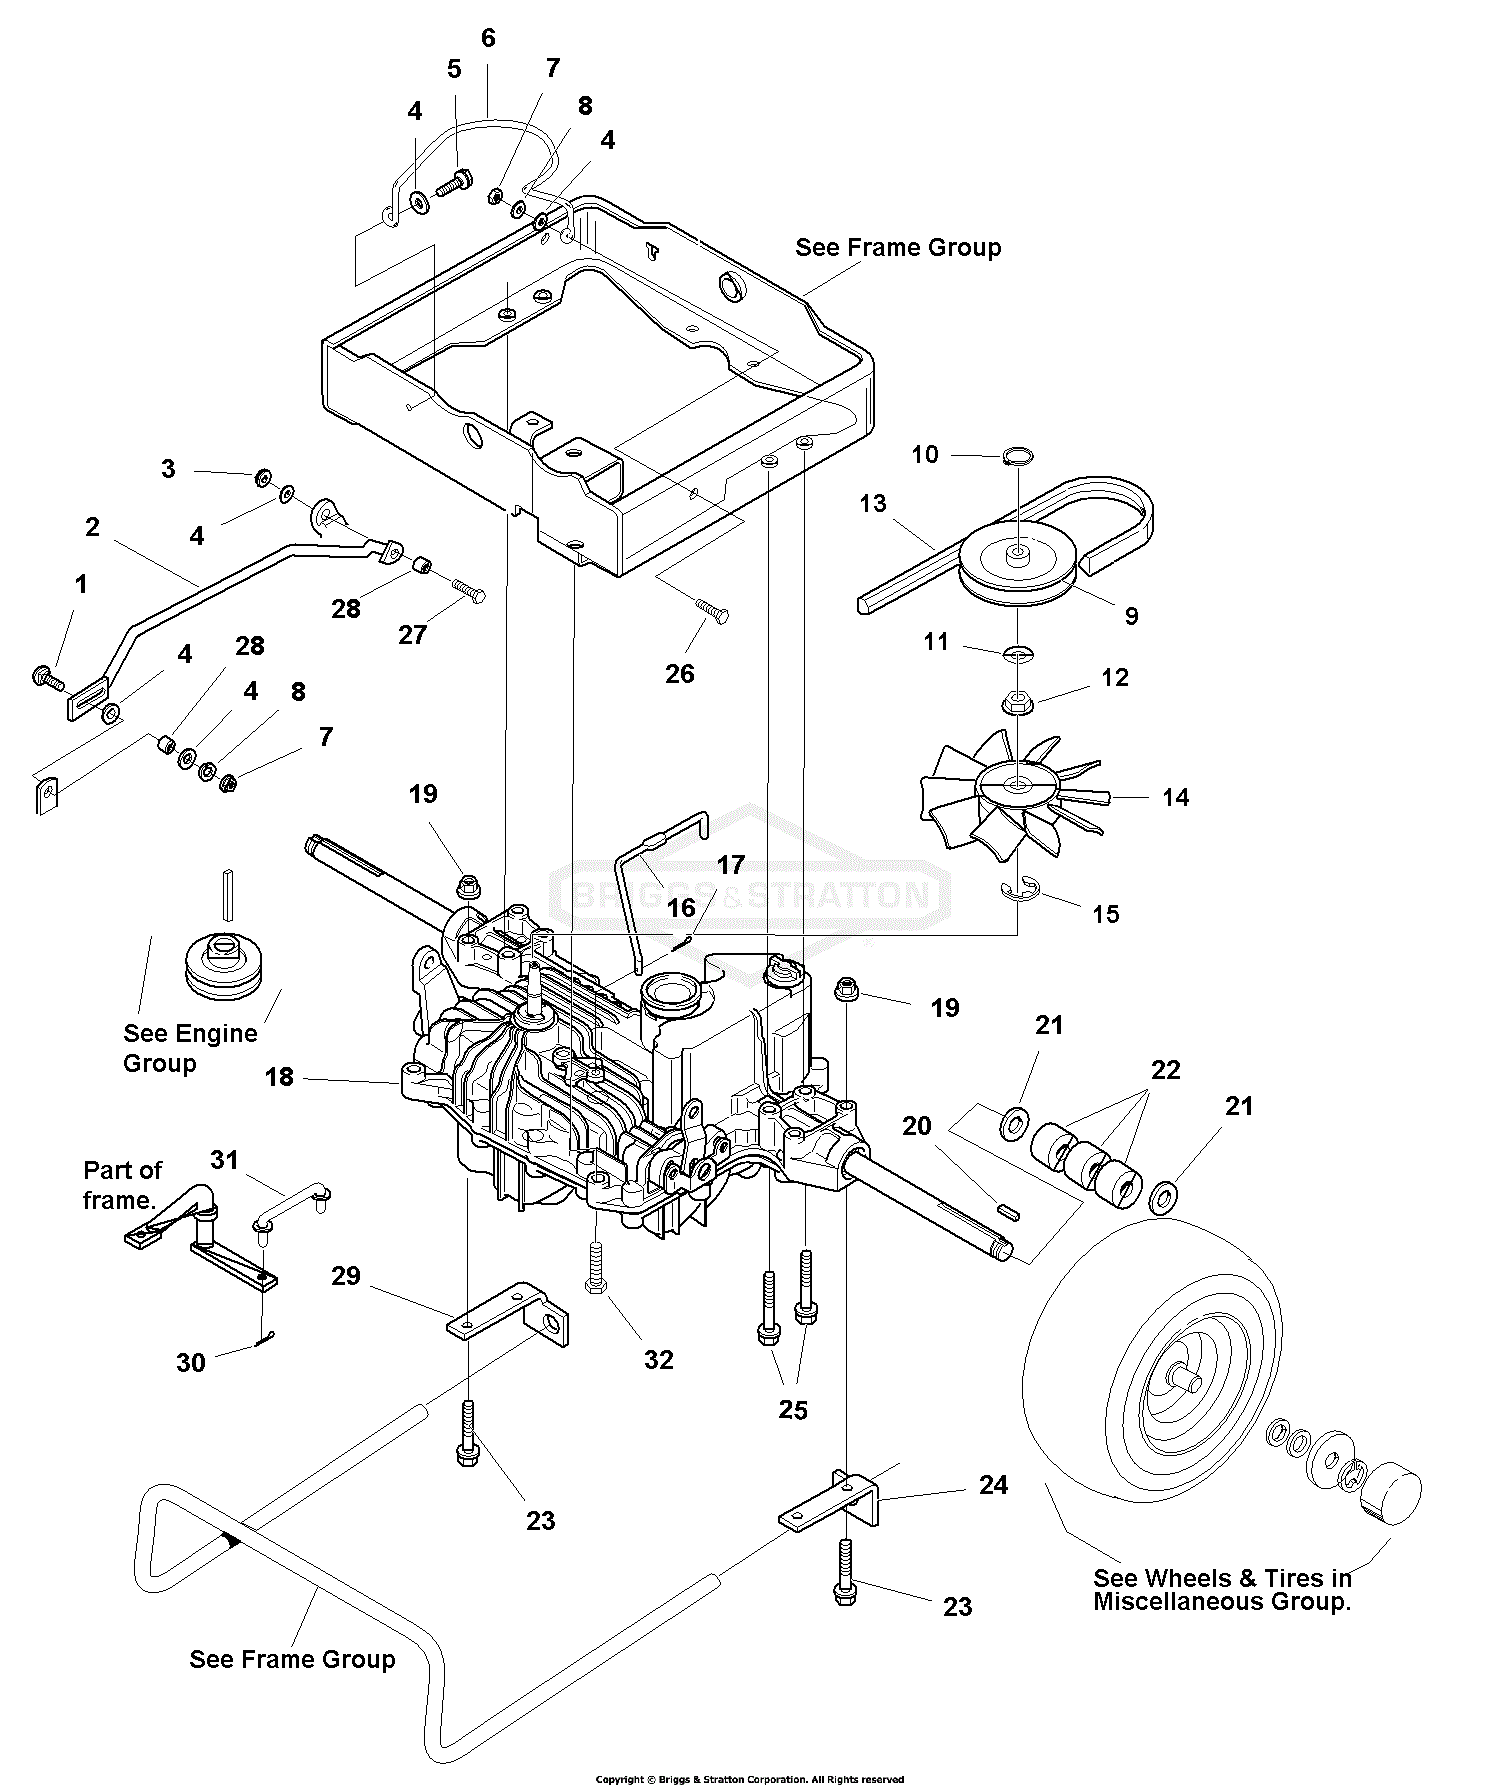 Simplicity Regent Parts Diagram